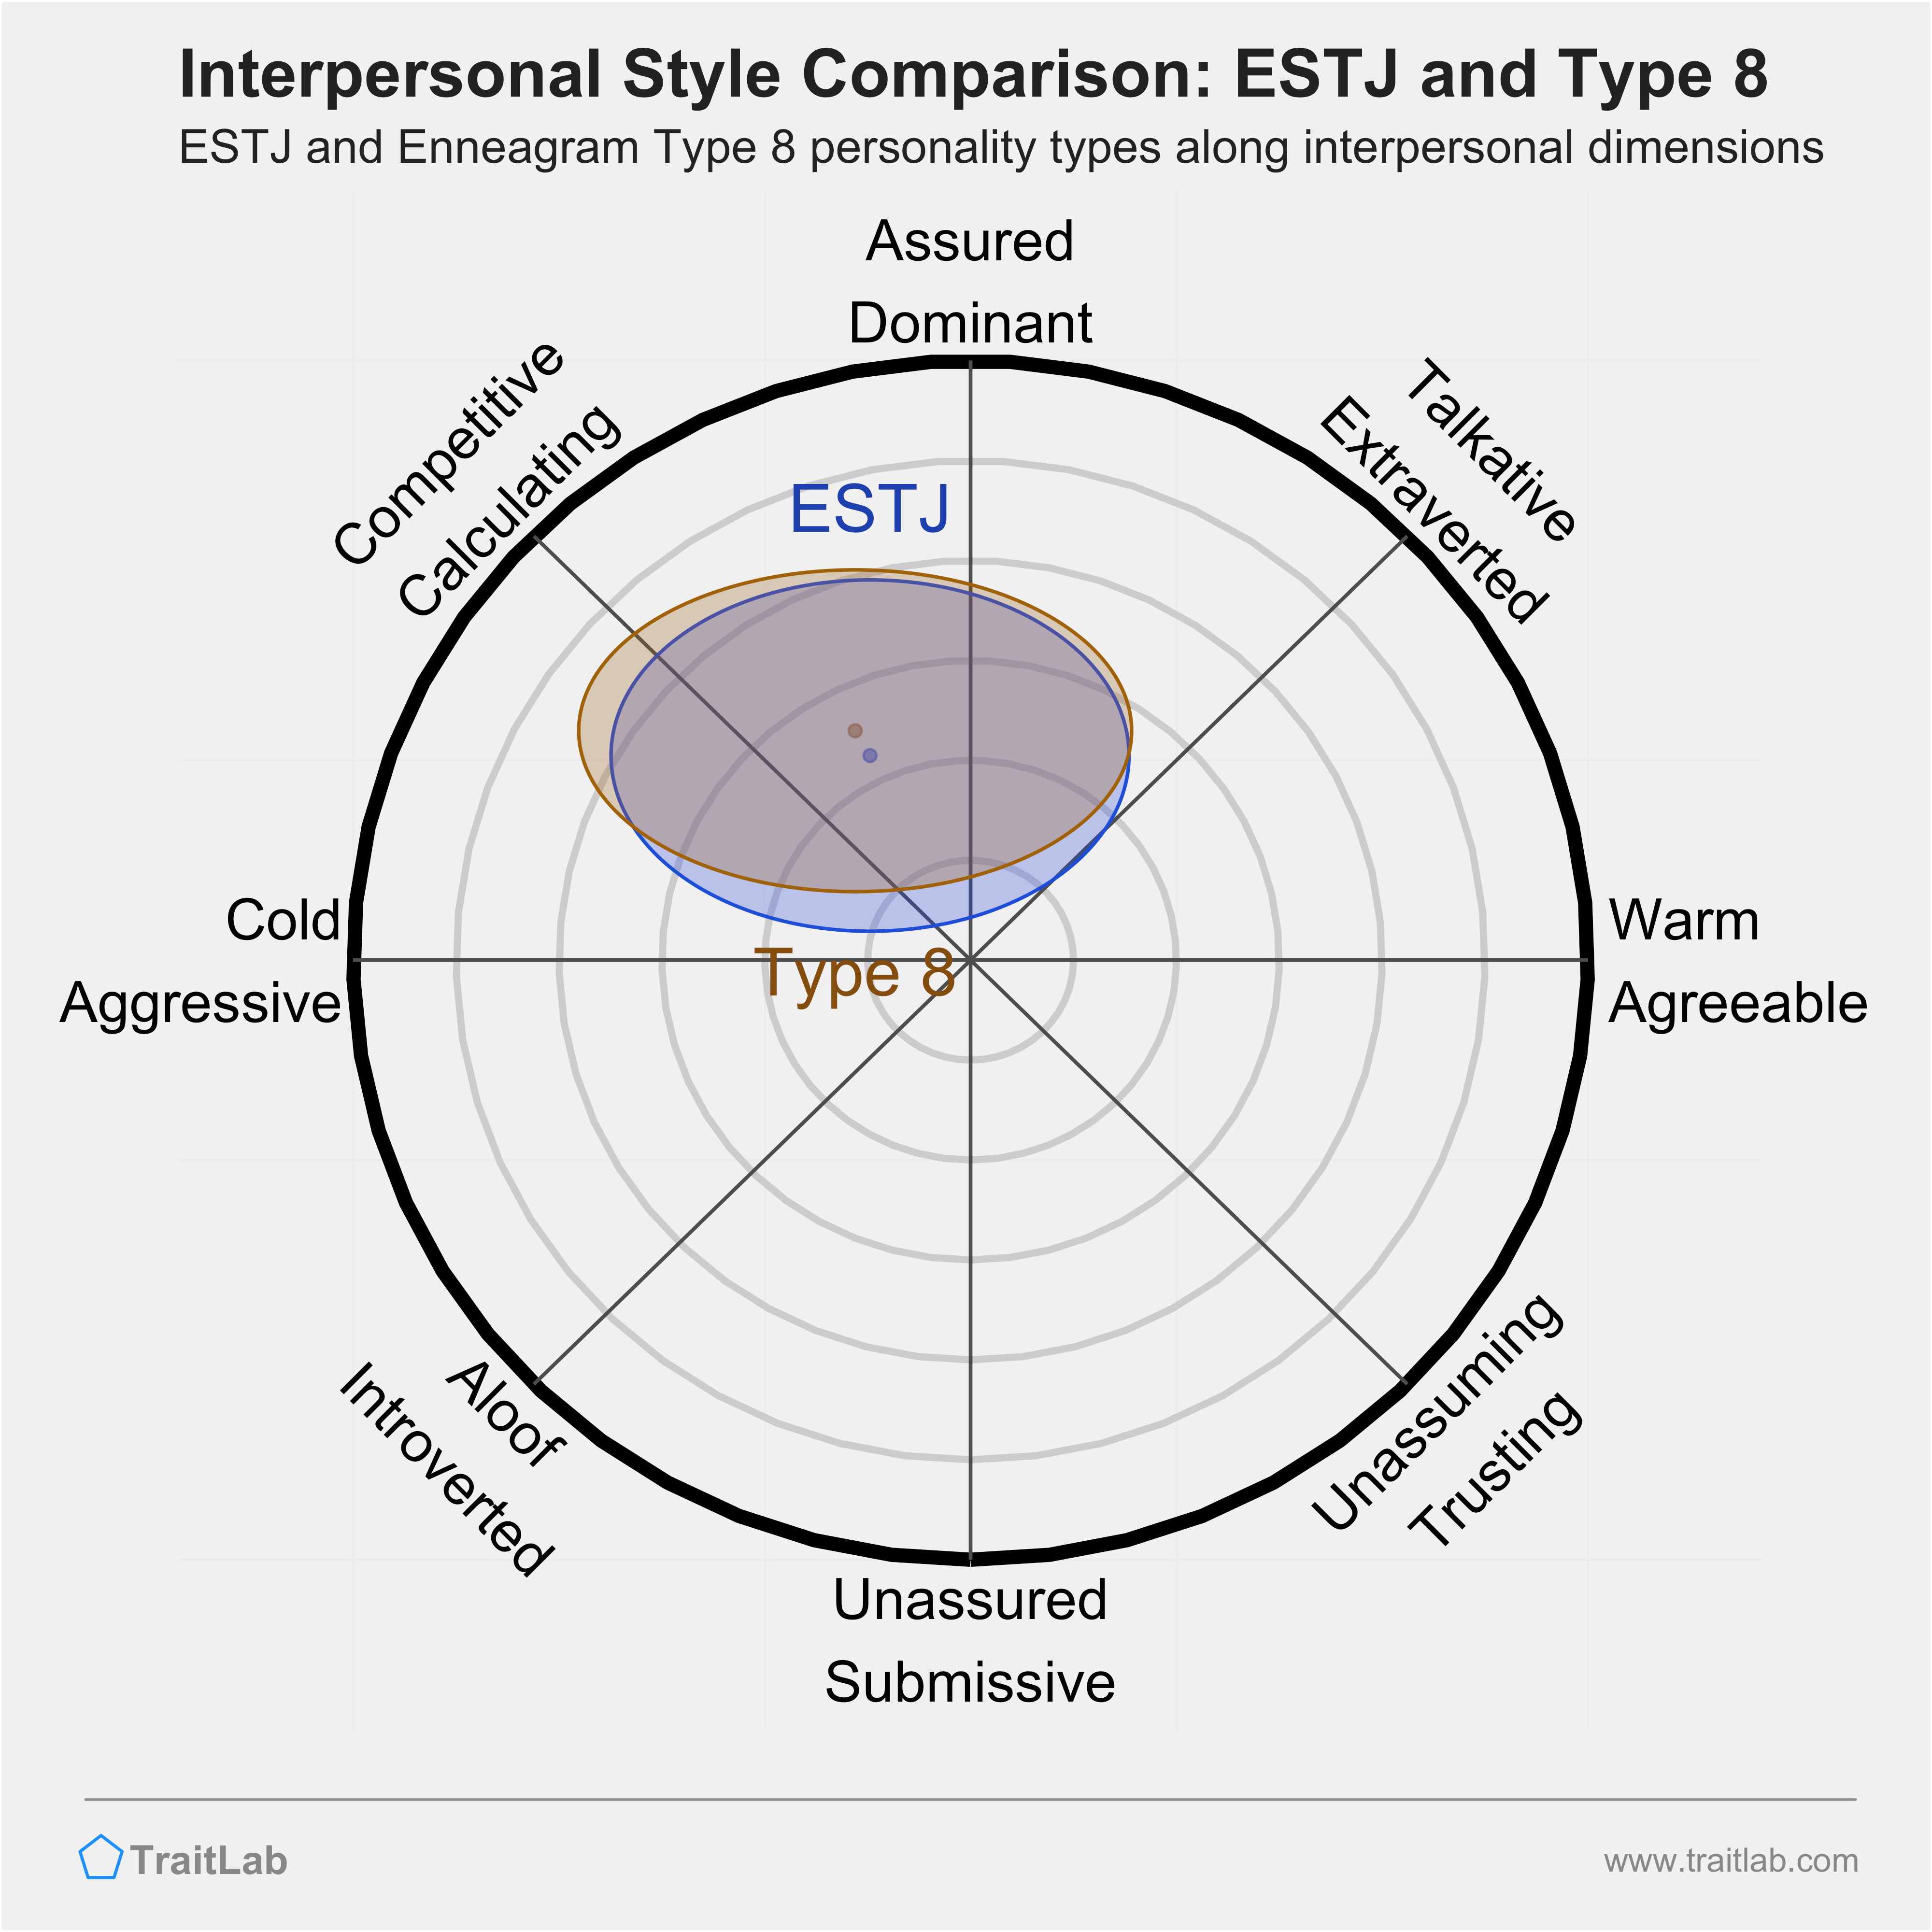 Enneagram ESTJ and Type 8 comparison across interpersonal dimensions